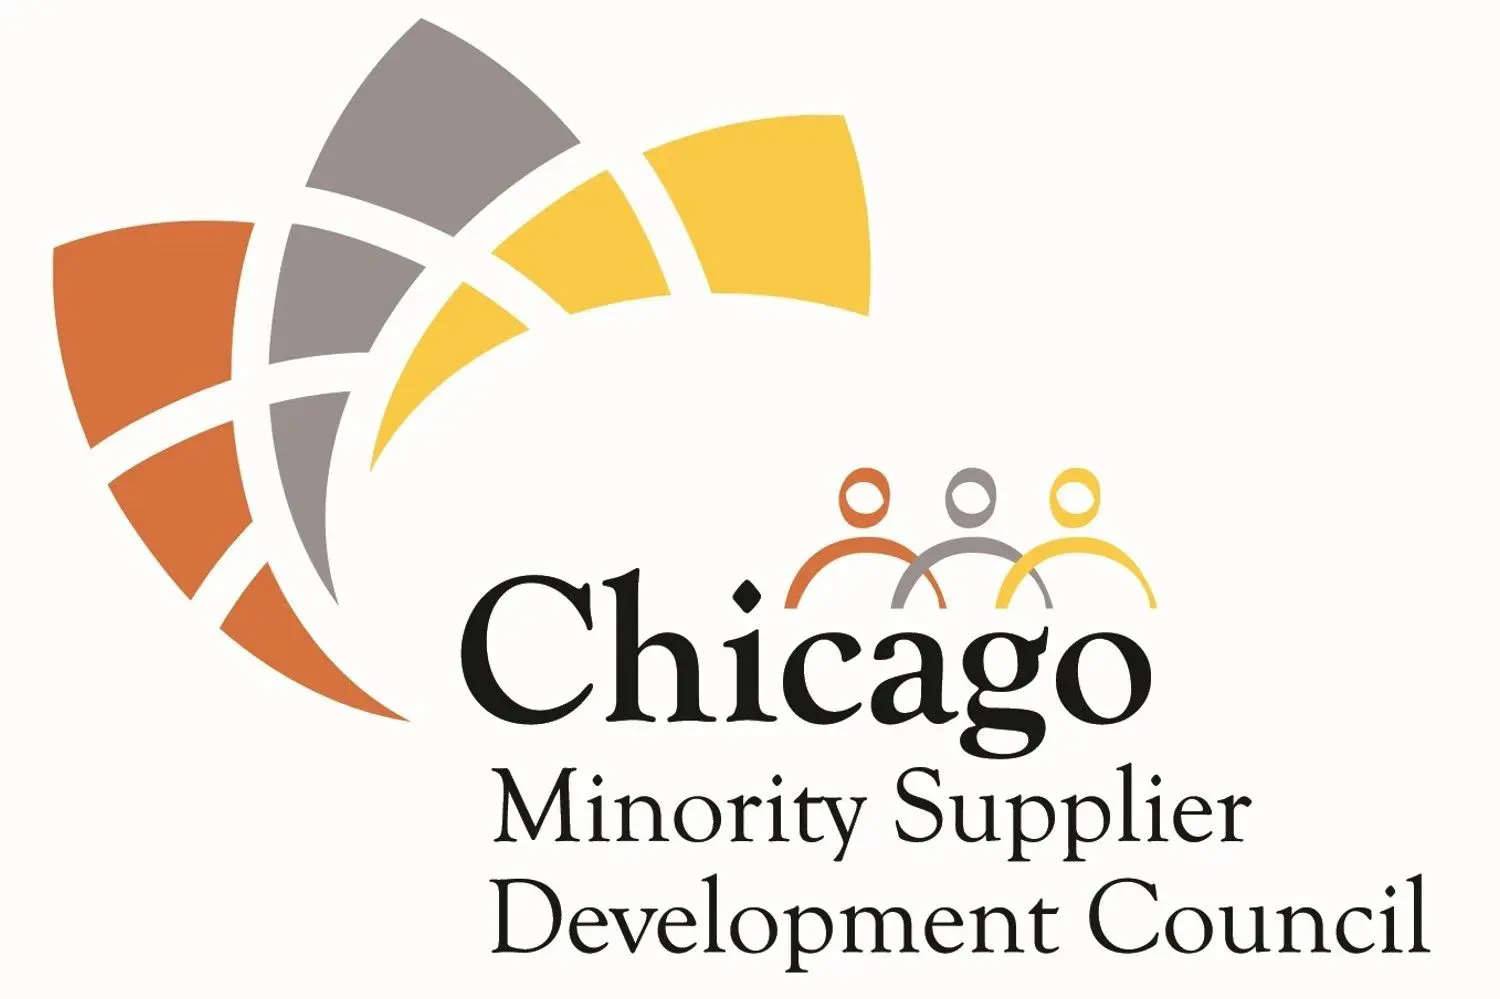 A logo for chicago minority supplier development council.